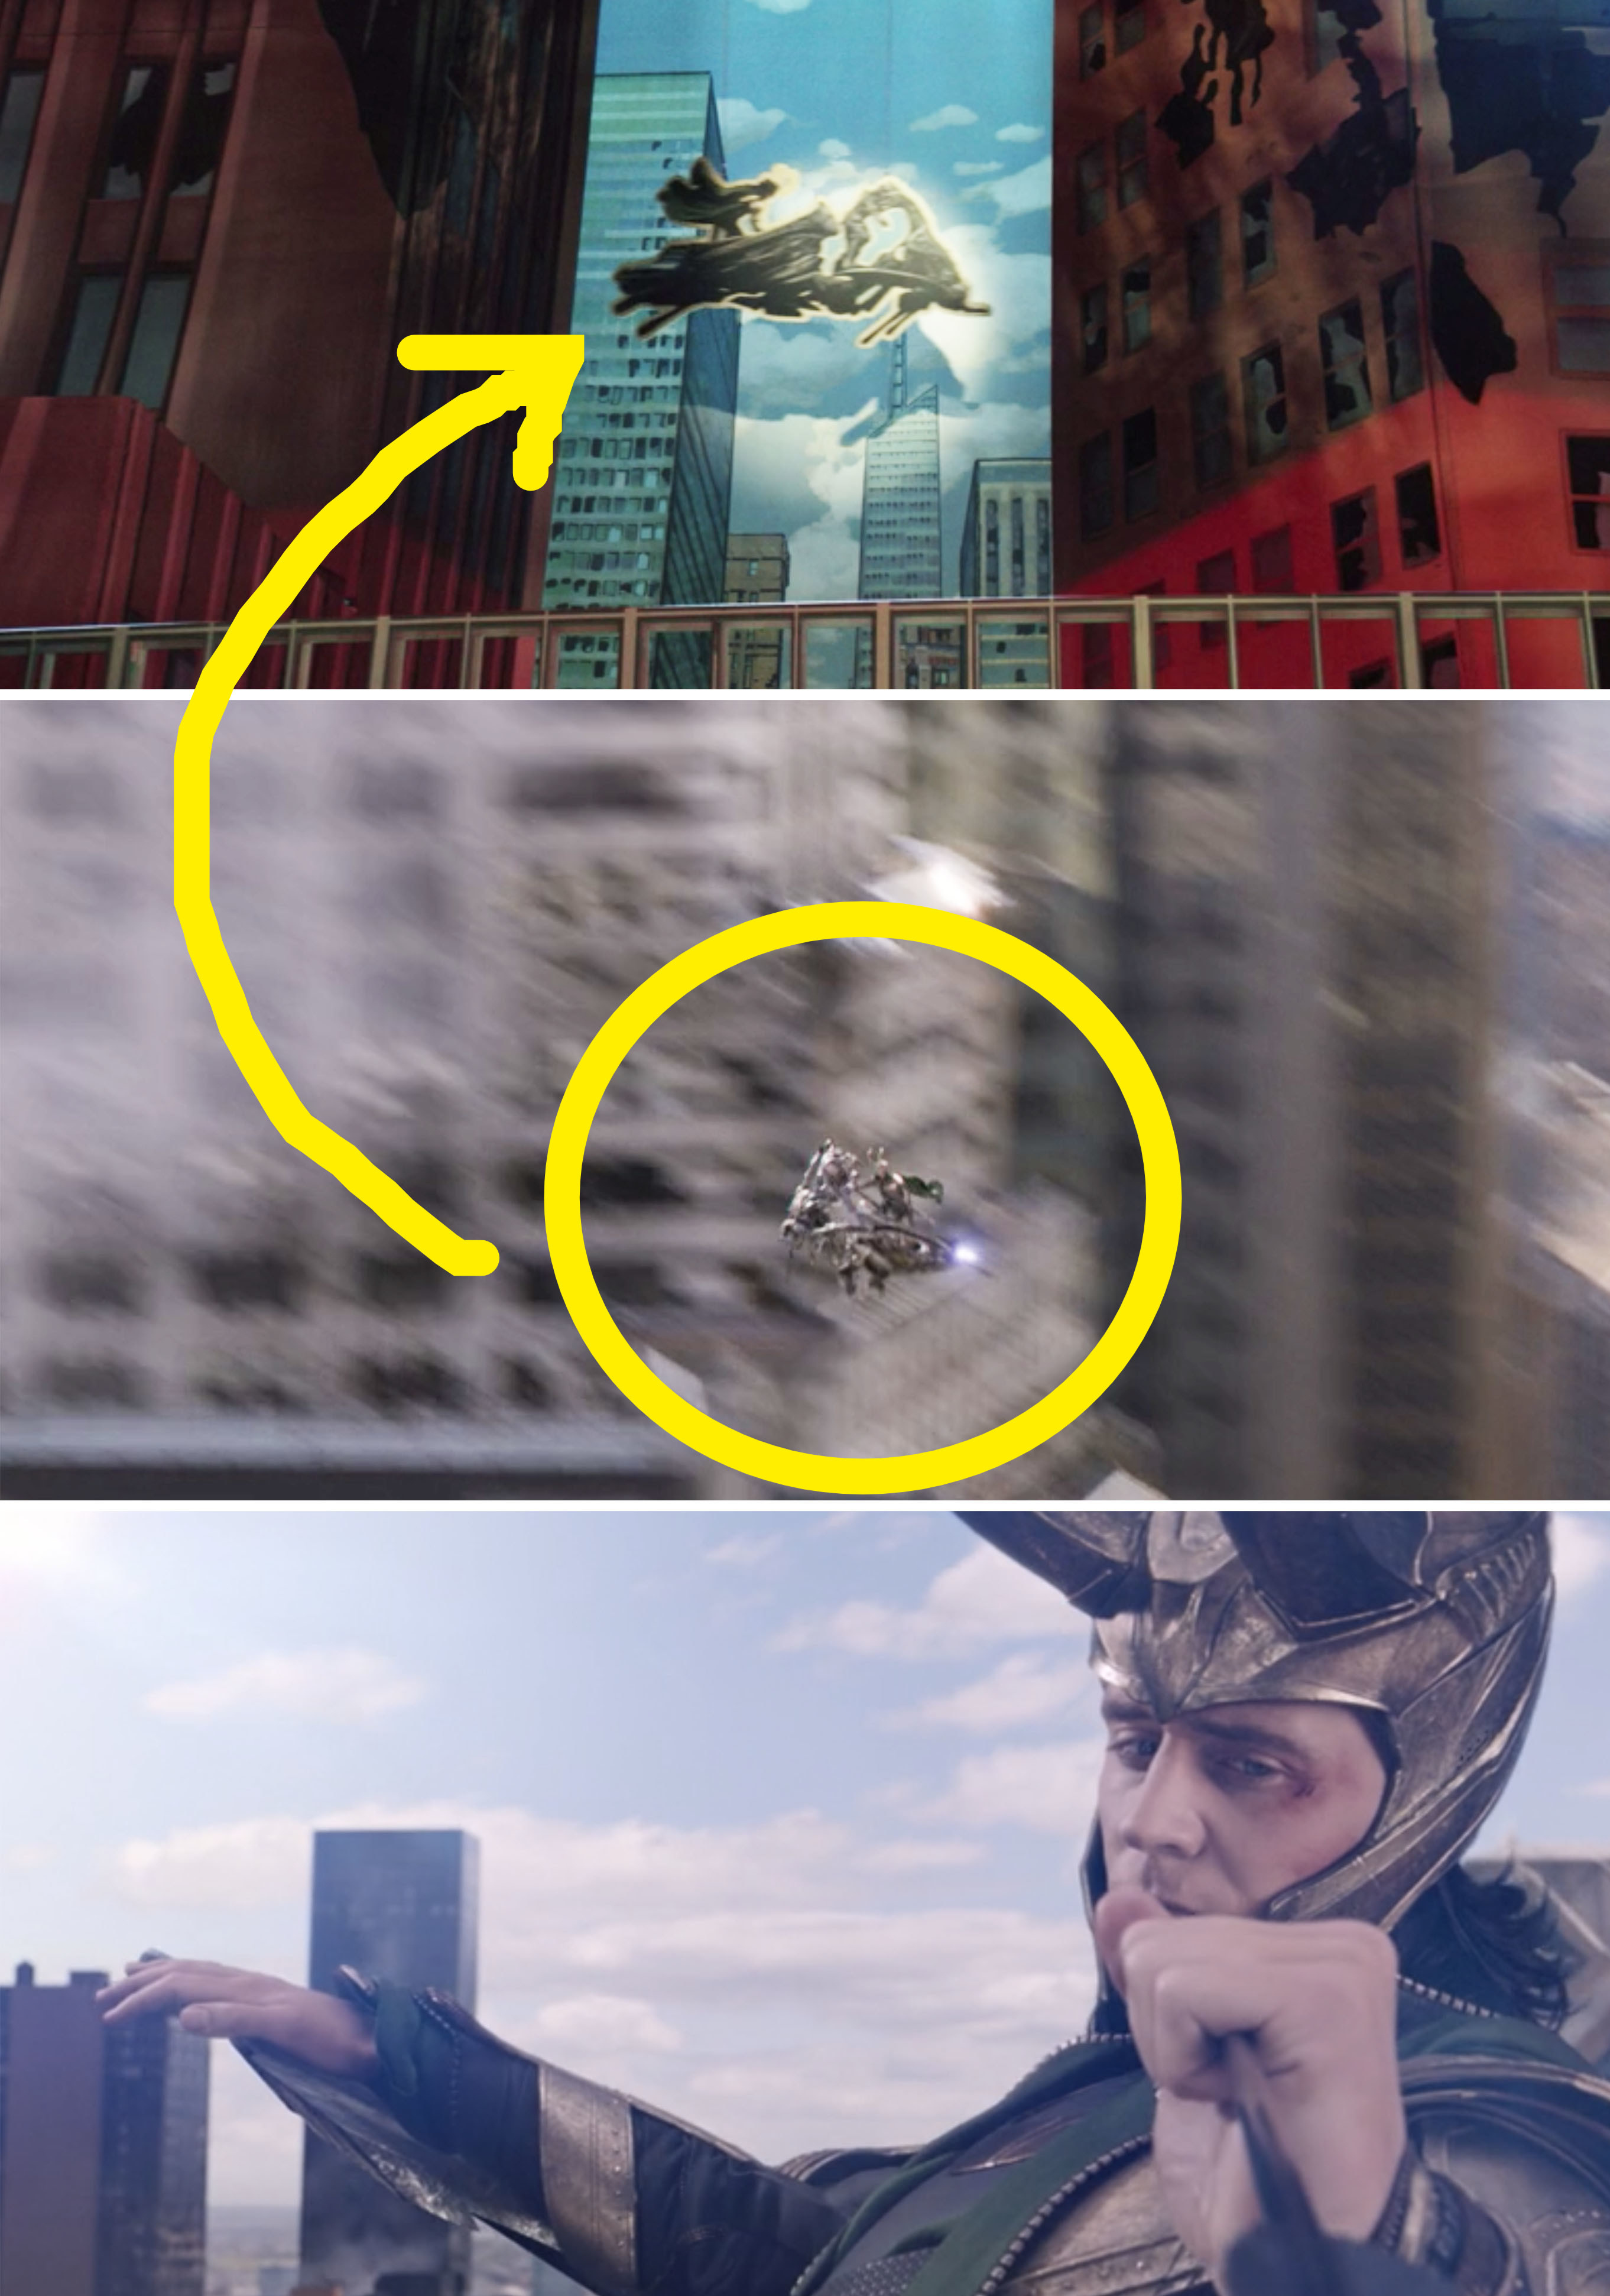 A cardboard cutout of Loki flying vs Loki flying in The Avengers